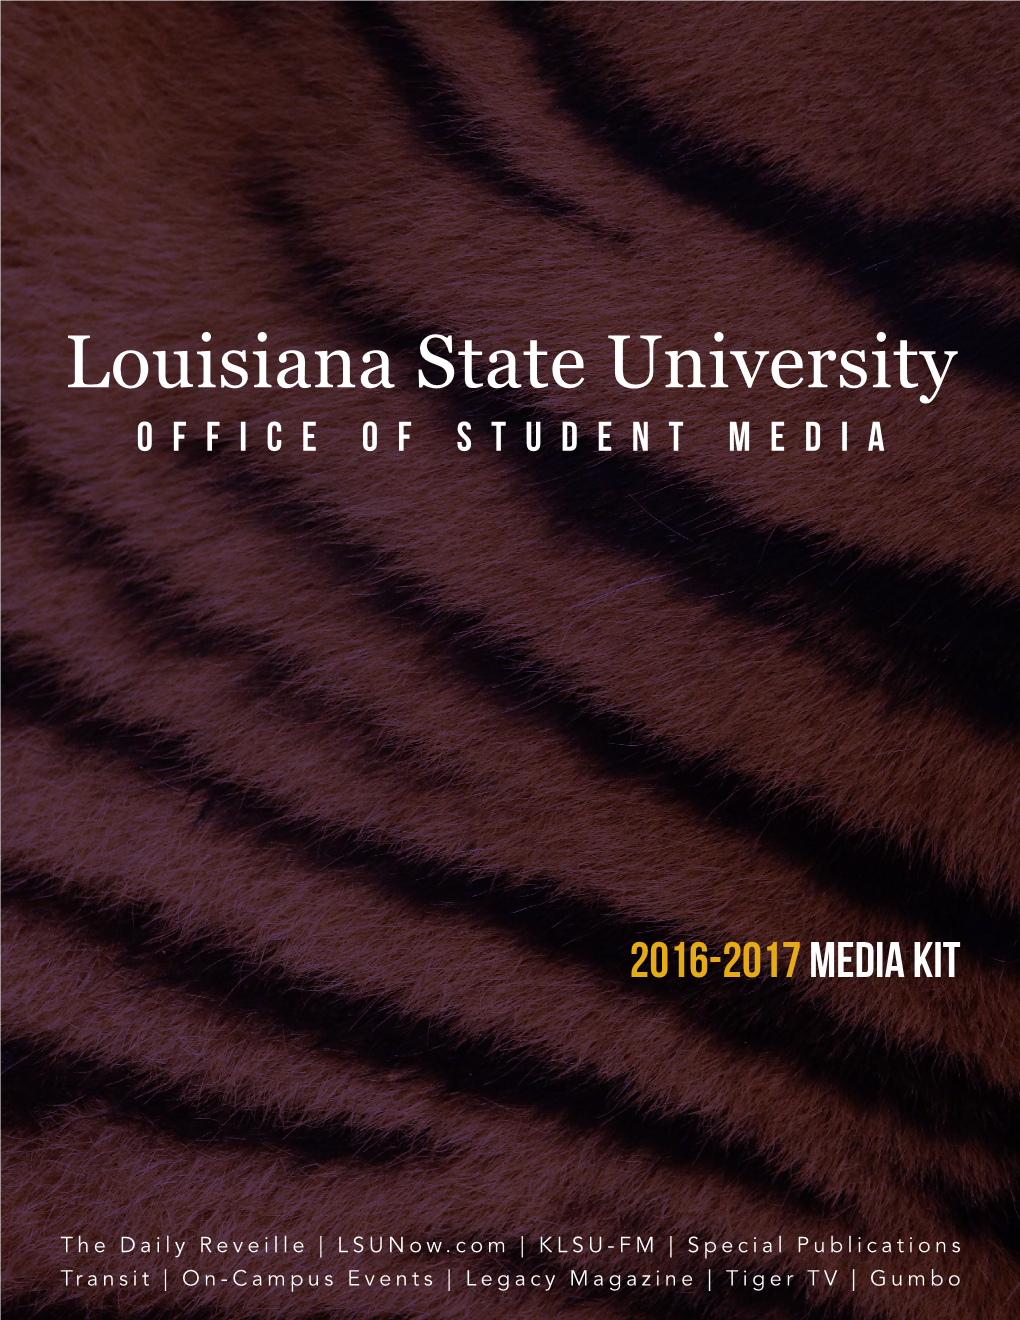 Louisiana State University Office of Student Media